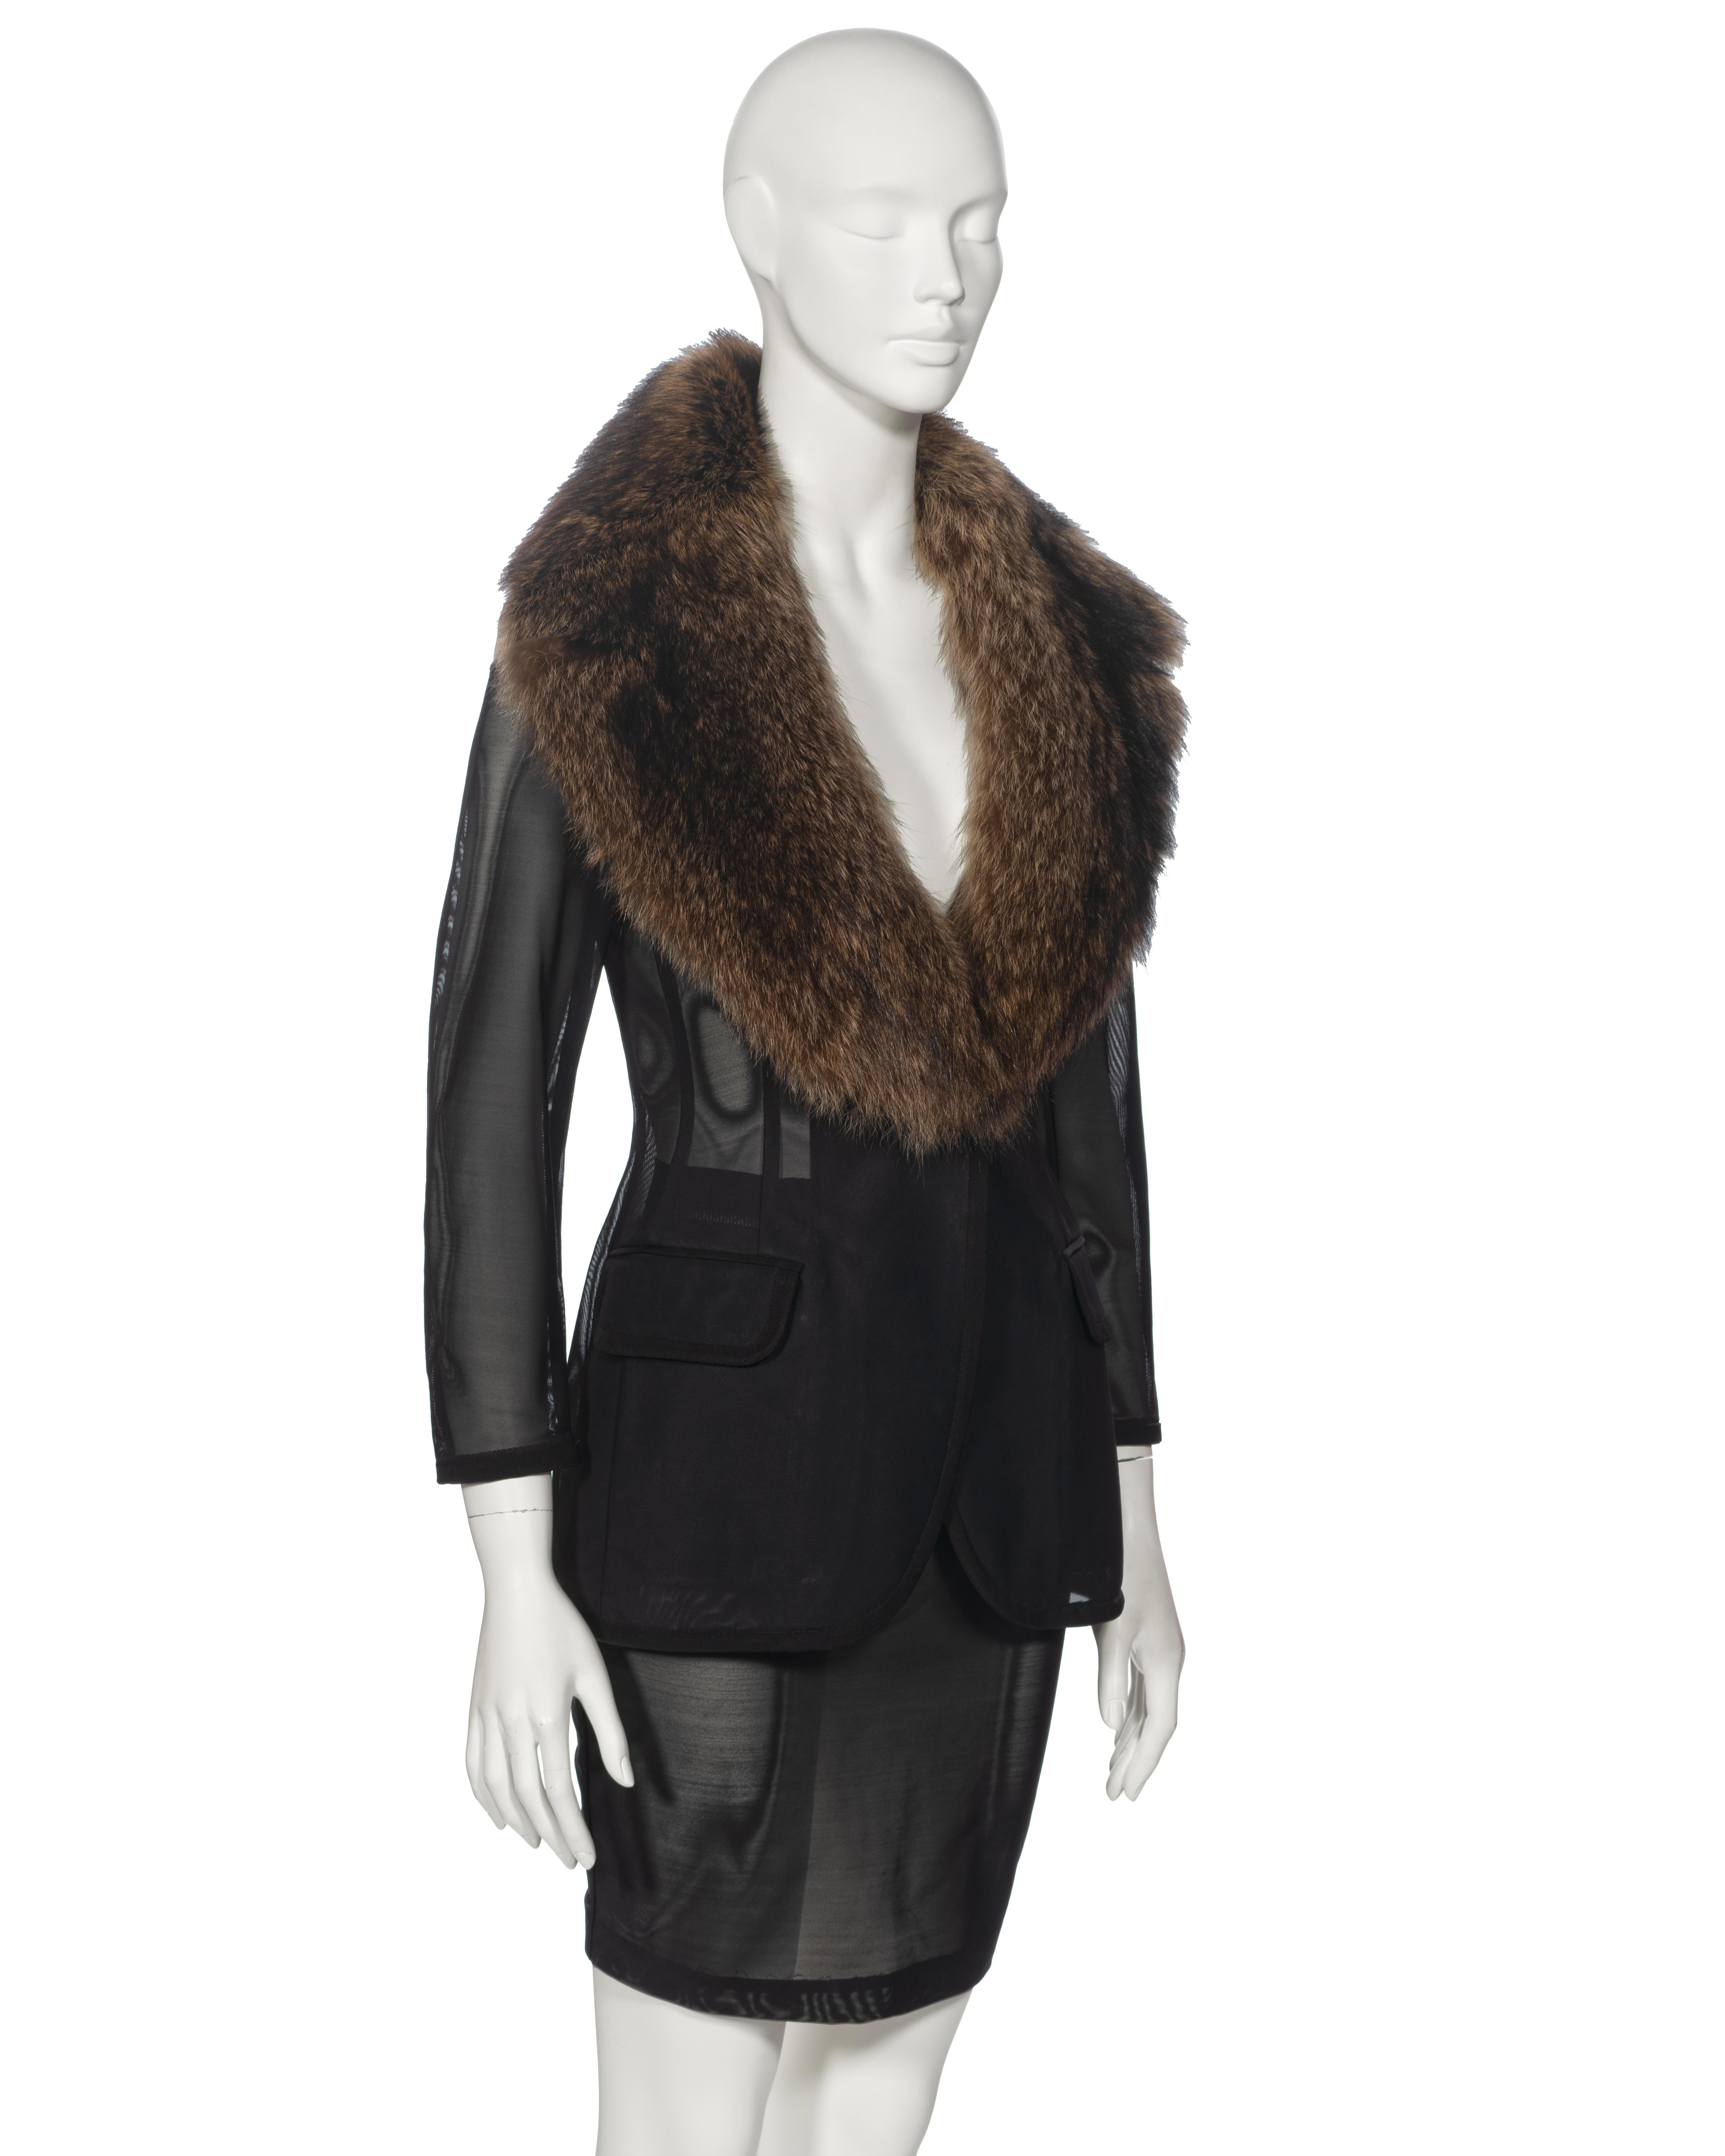 Dolce & Gabbana Black Power Net Skirt Suit with Fur Collar, fw 1995 2